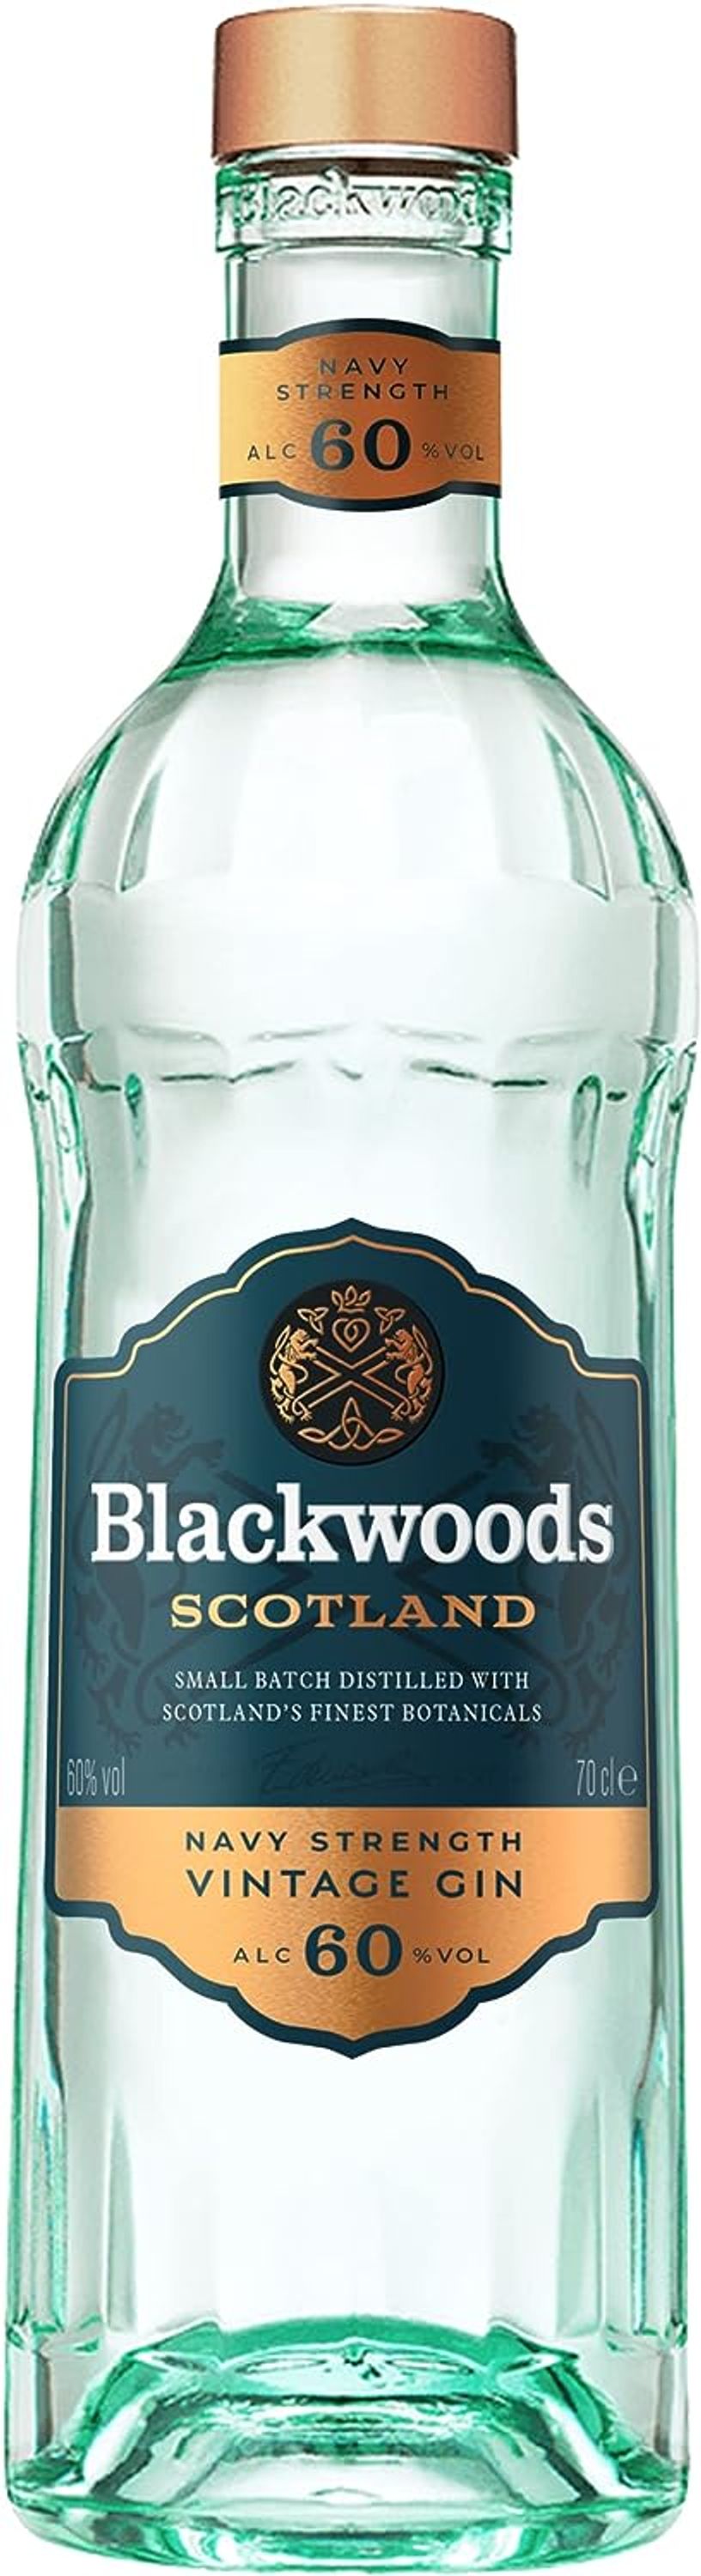 Blackwood's Vintage Gin Navy Strength 0.7l, alc. 60% by volume